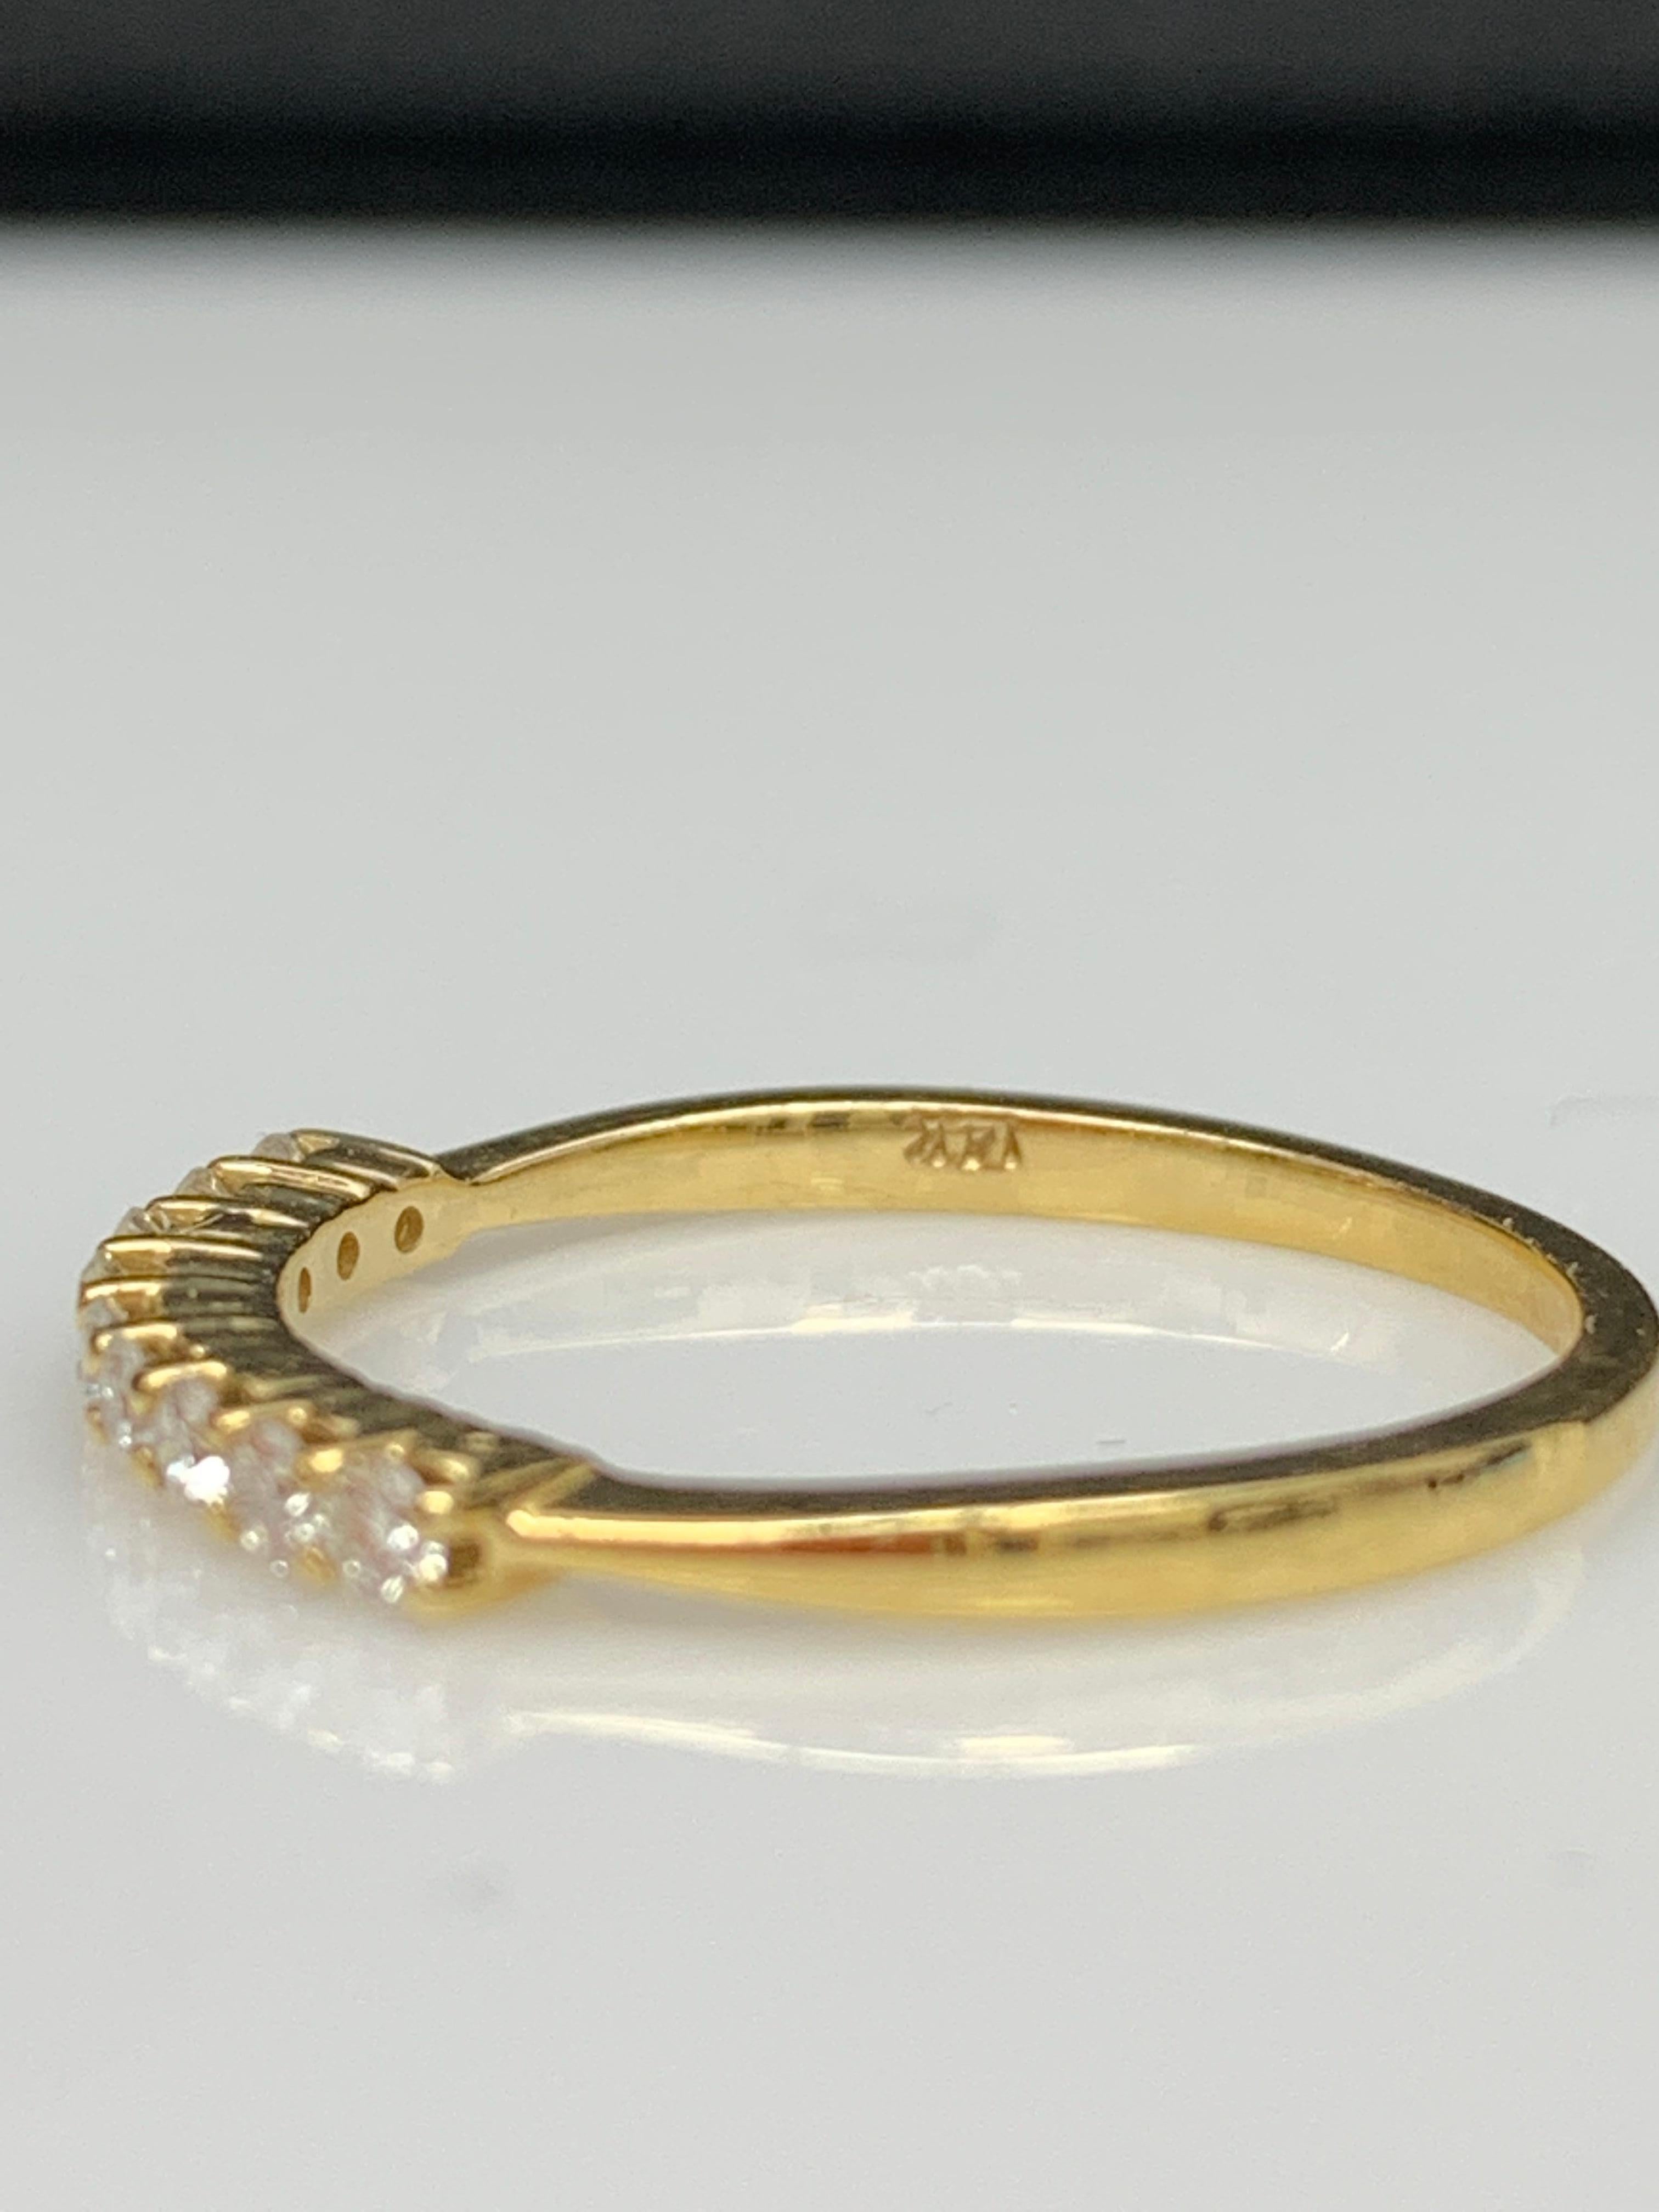 0.23 Carat Brilliant cut Diamond Wedding Band in 14K Yellow Gold For Sale 1